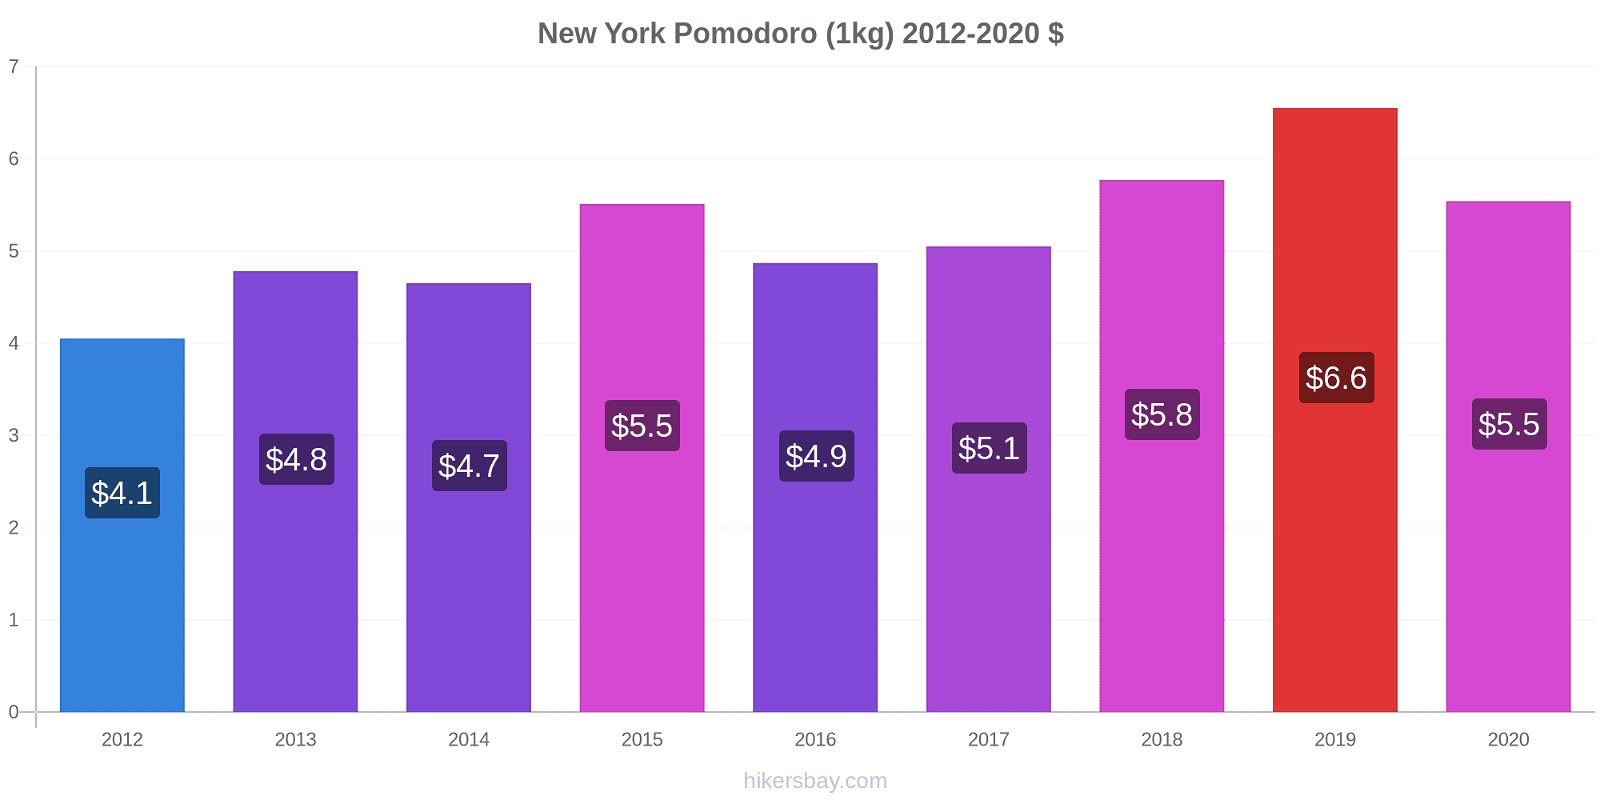 New York variazioni di prezzo Pomodoro (1kg) hikersbay.com